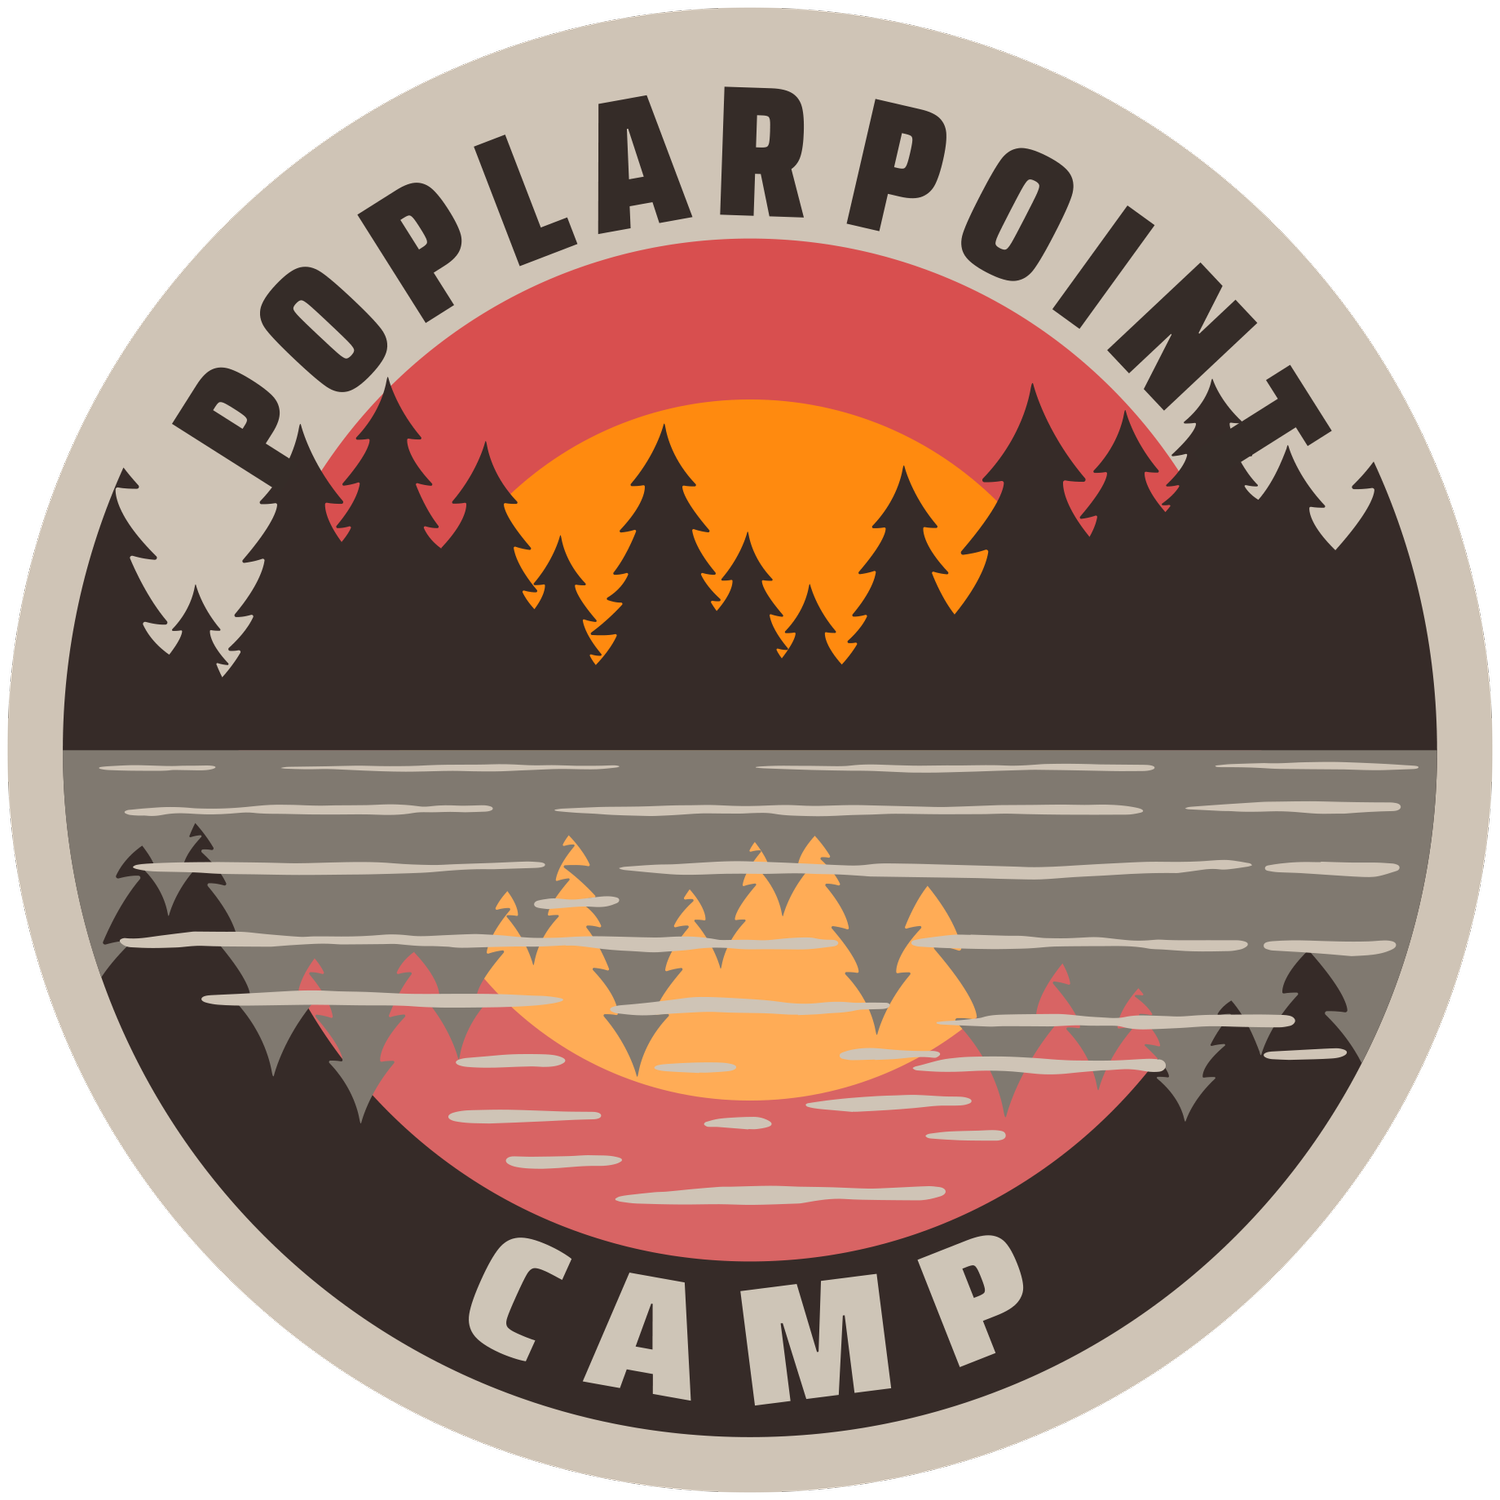 Poplar Point Camp